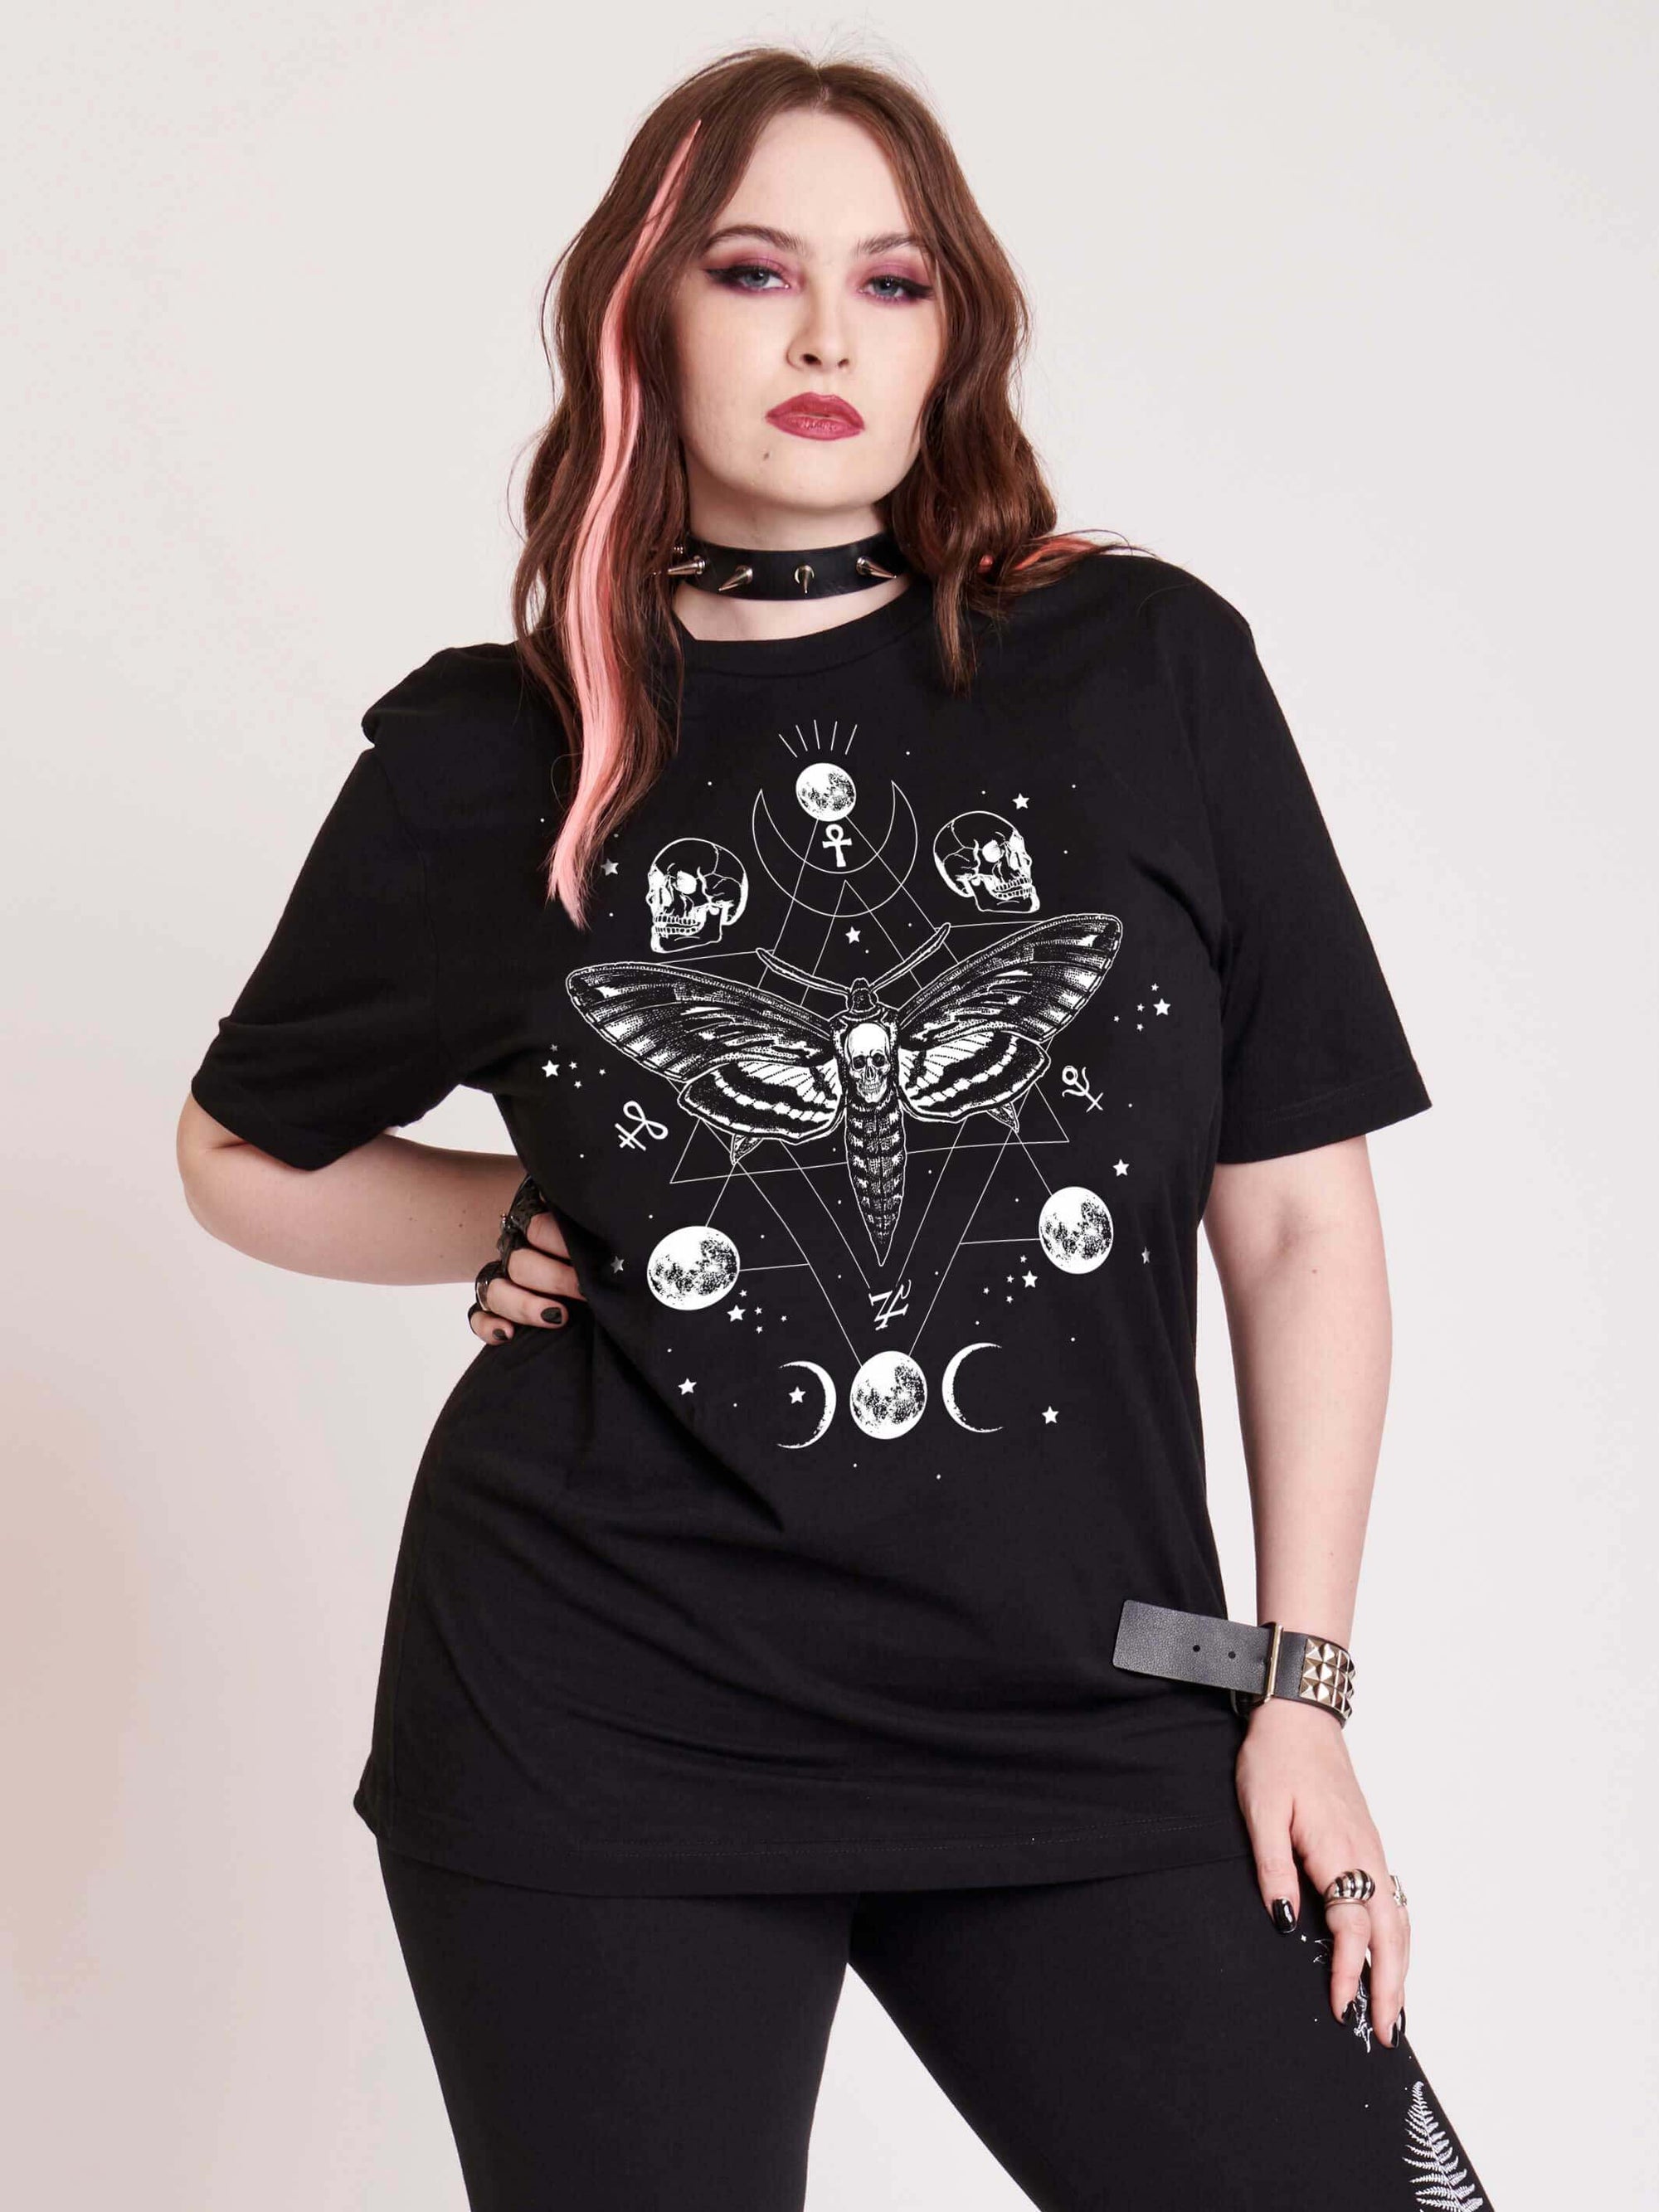 Deathmoth art on unisex black t-shirt